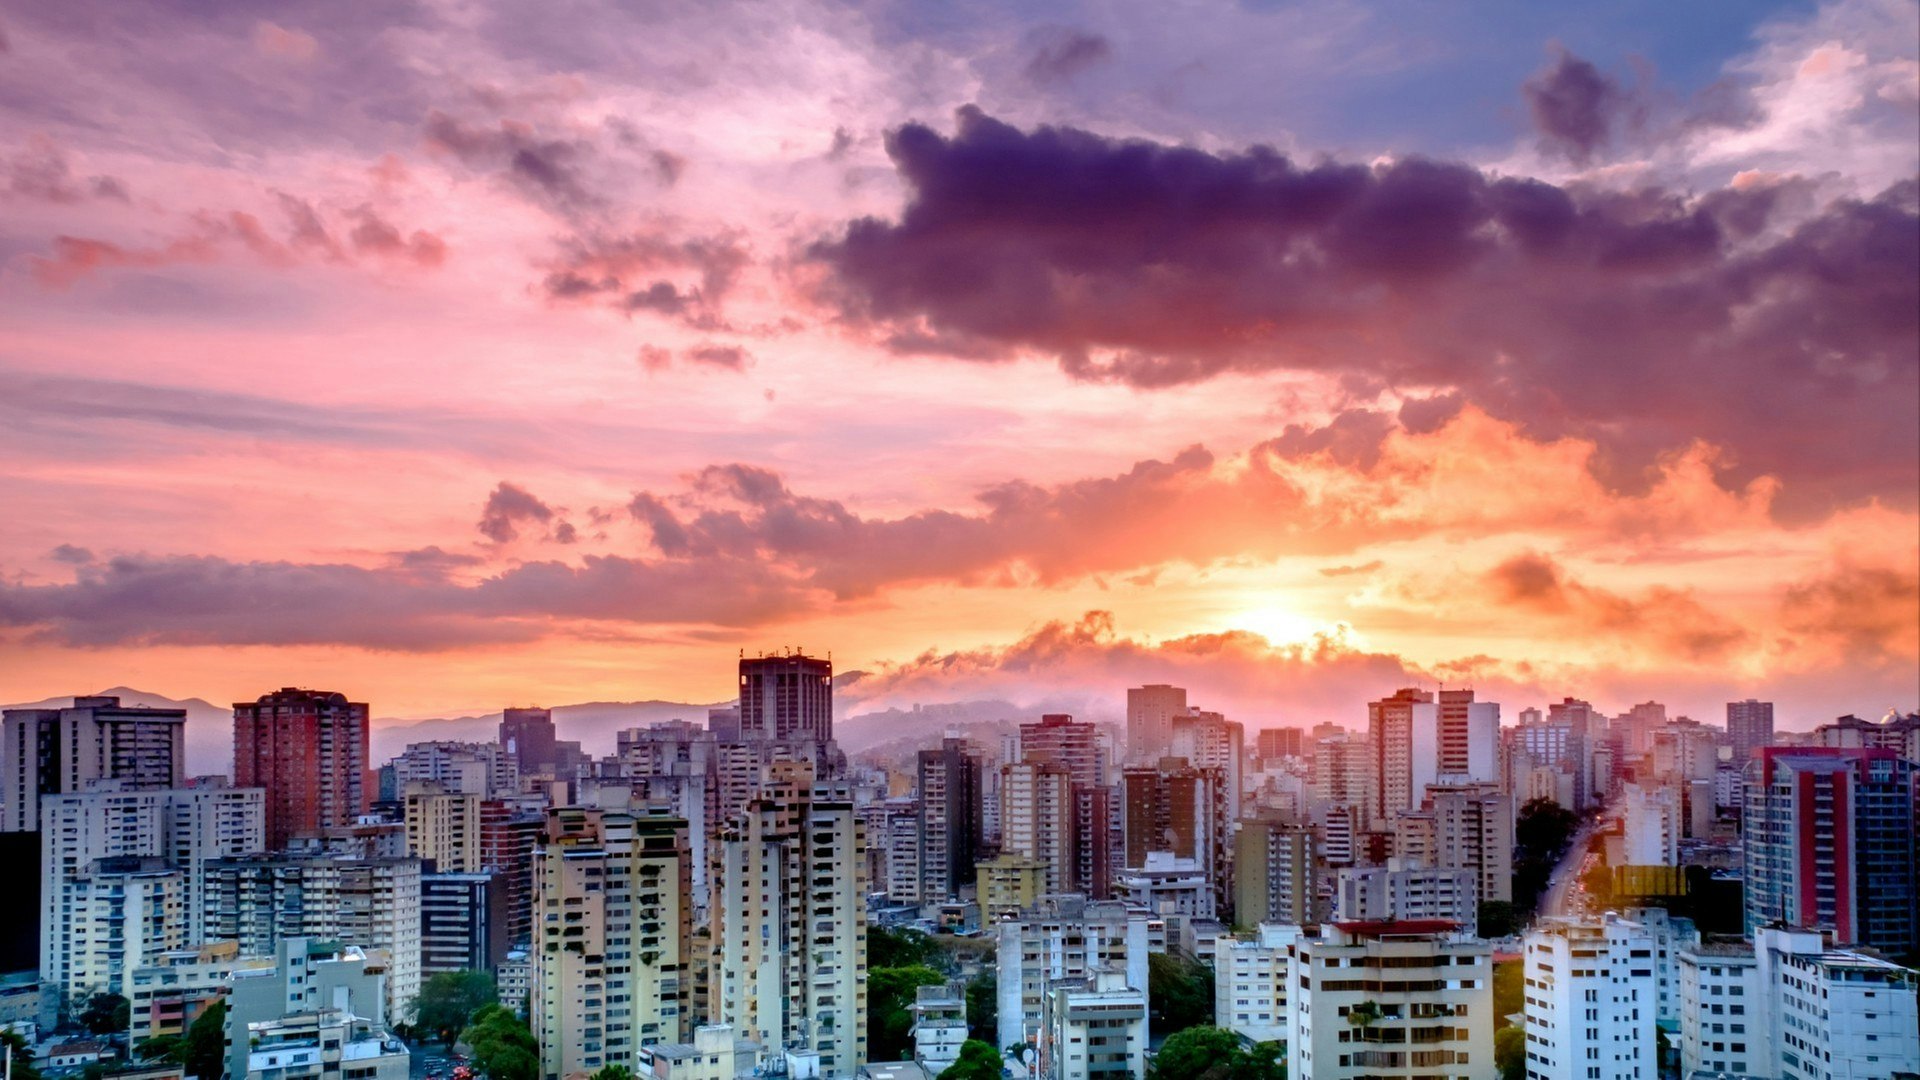 Colorful Sunset over the City, Caracas, Venezuela